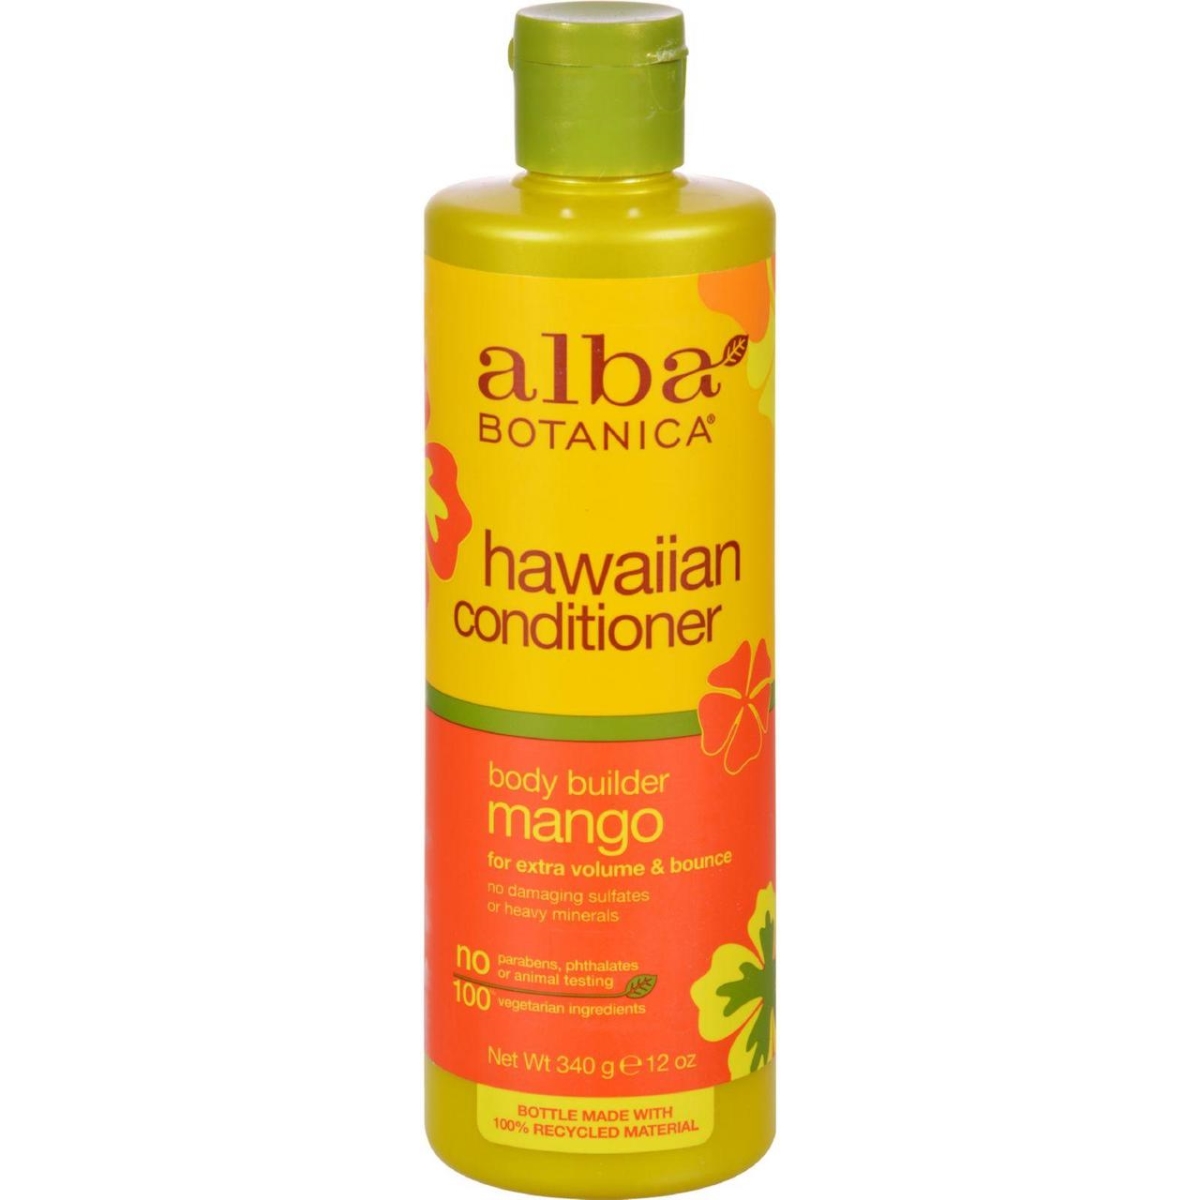 Hg0596551 12 Fl Oz Hawaiian Hair Conditioner, Mango Moisturizing